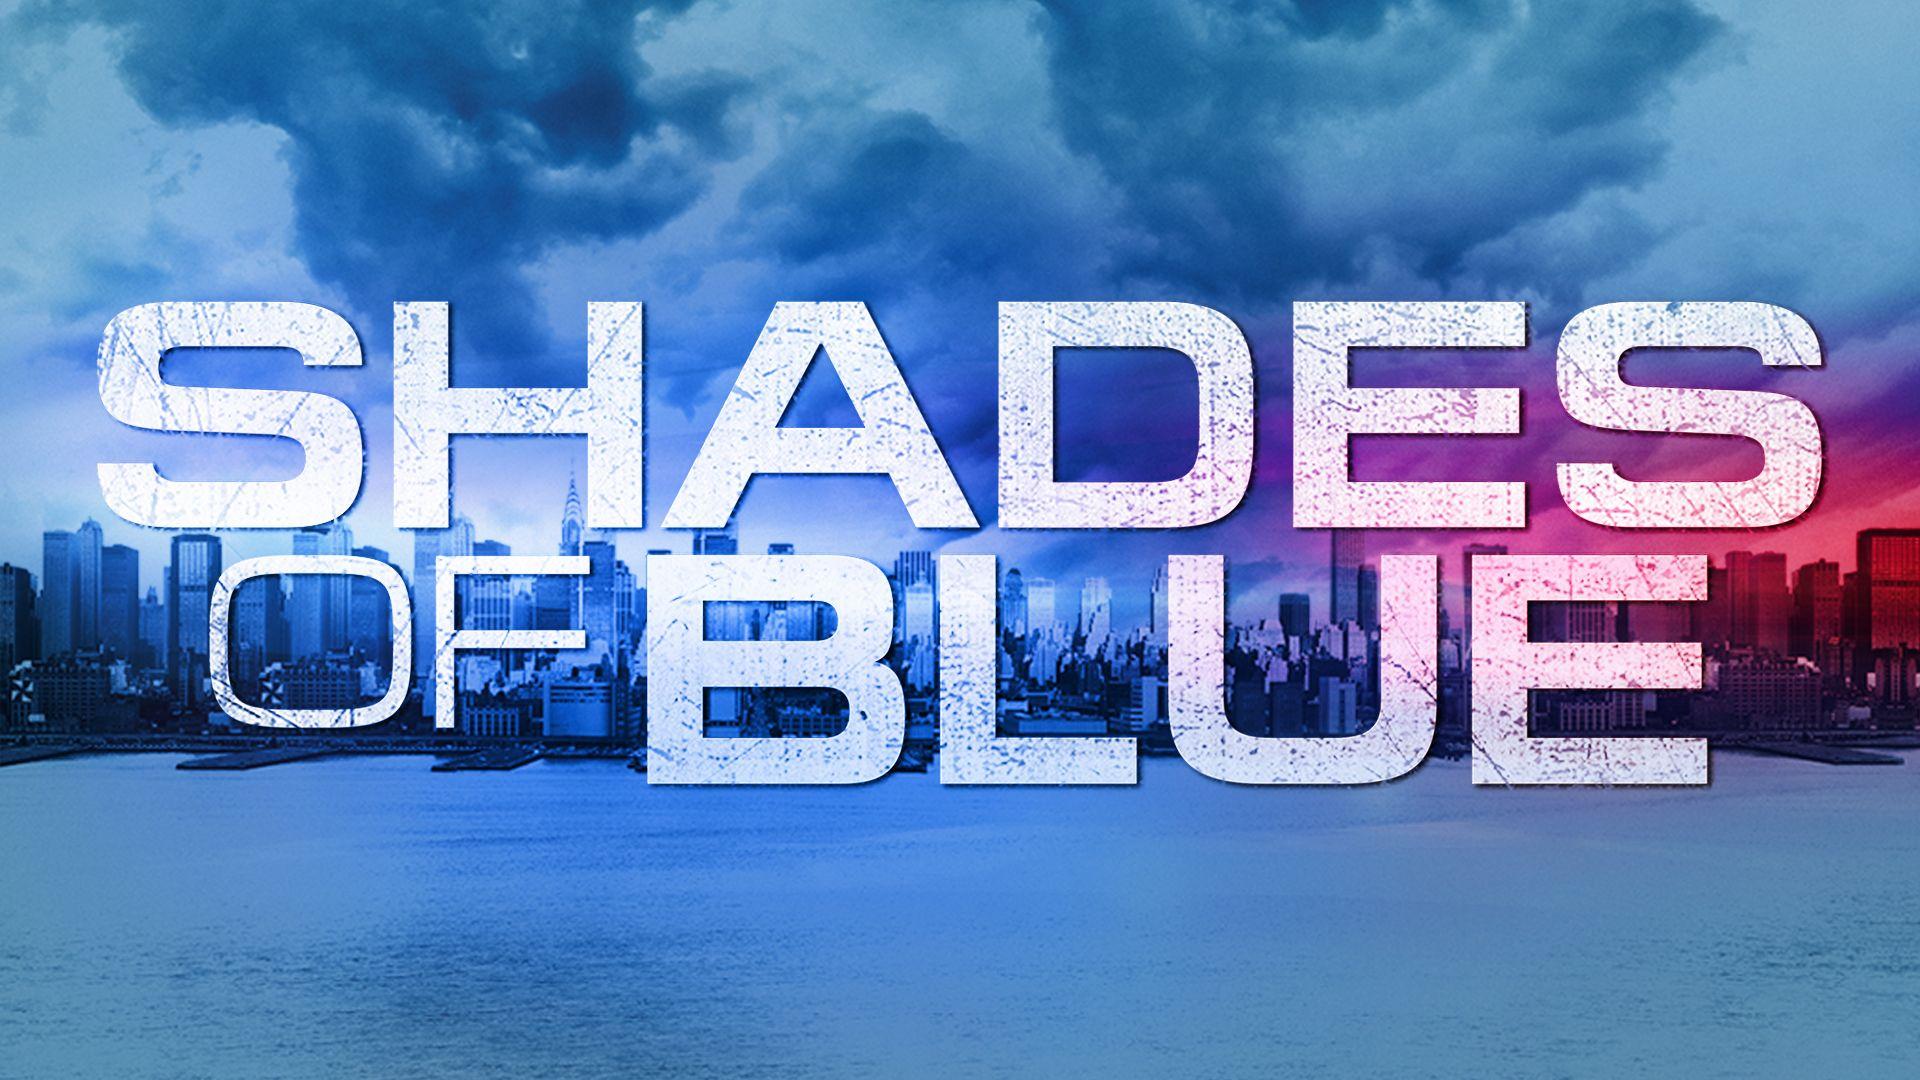 madlib shades of blue download rar